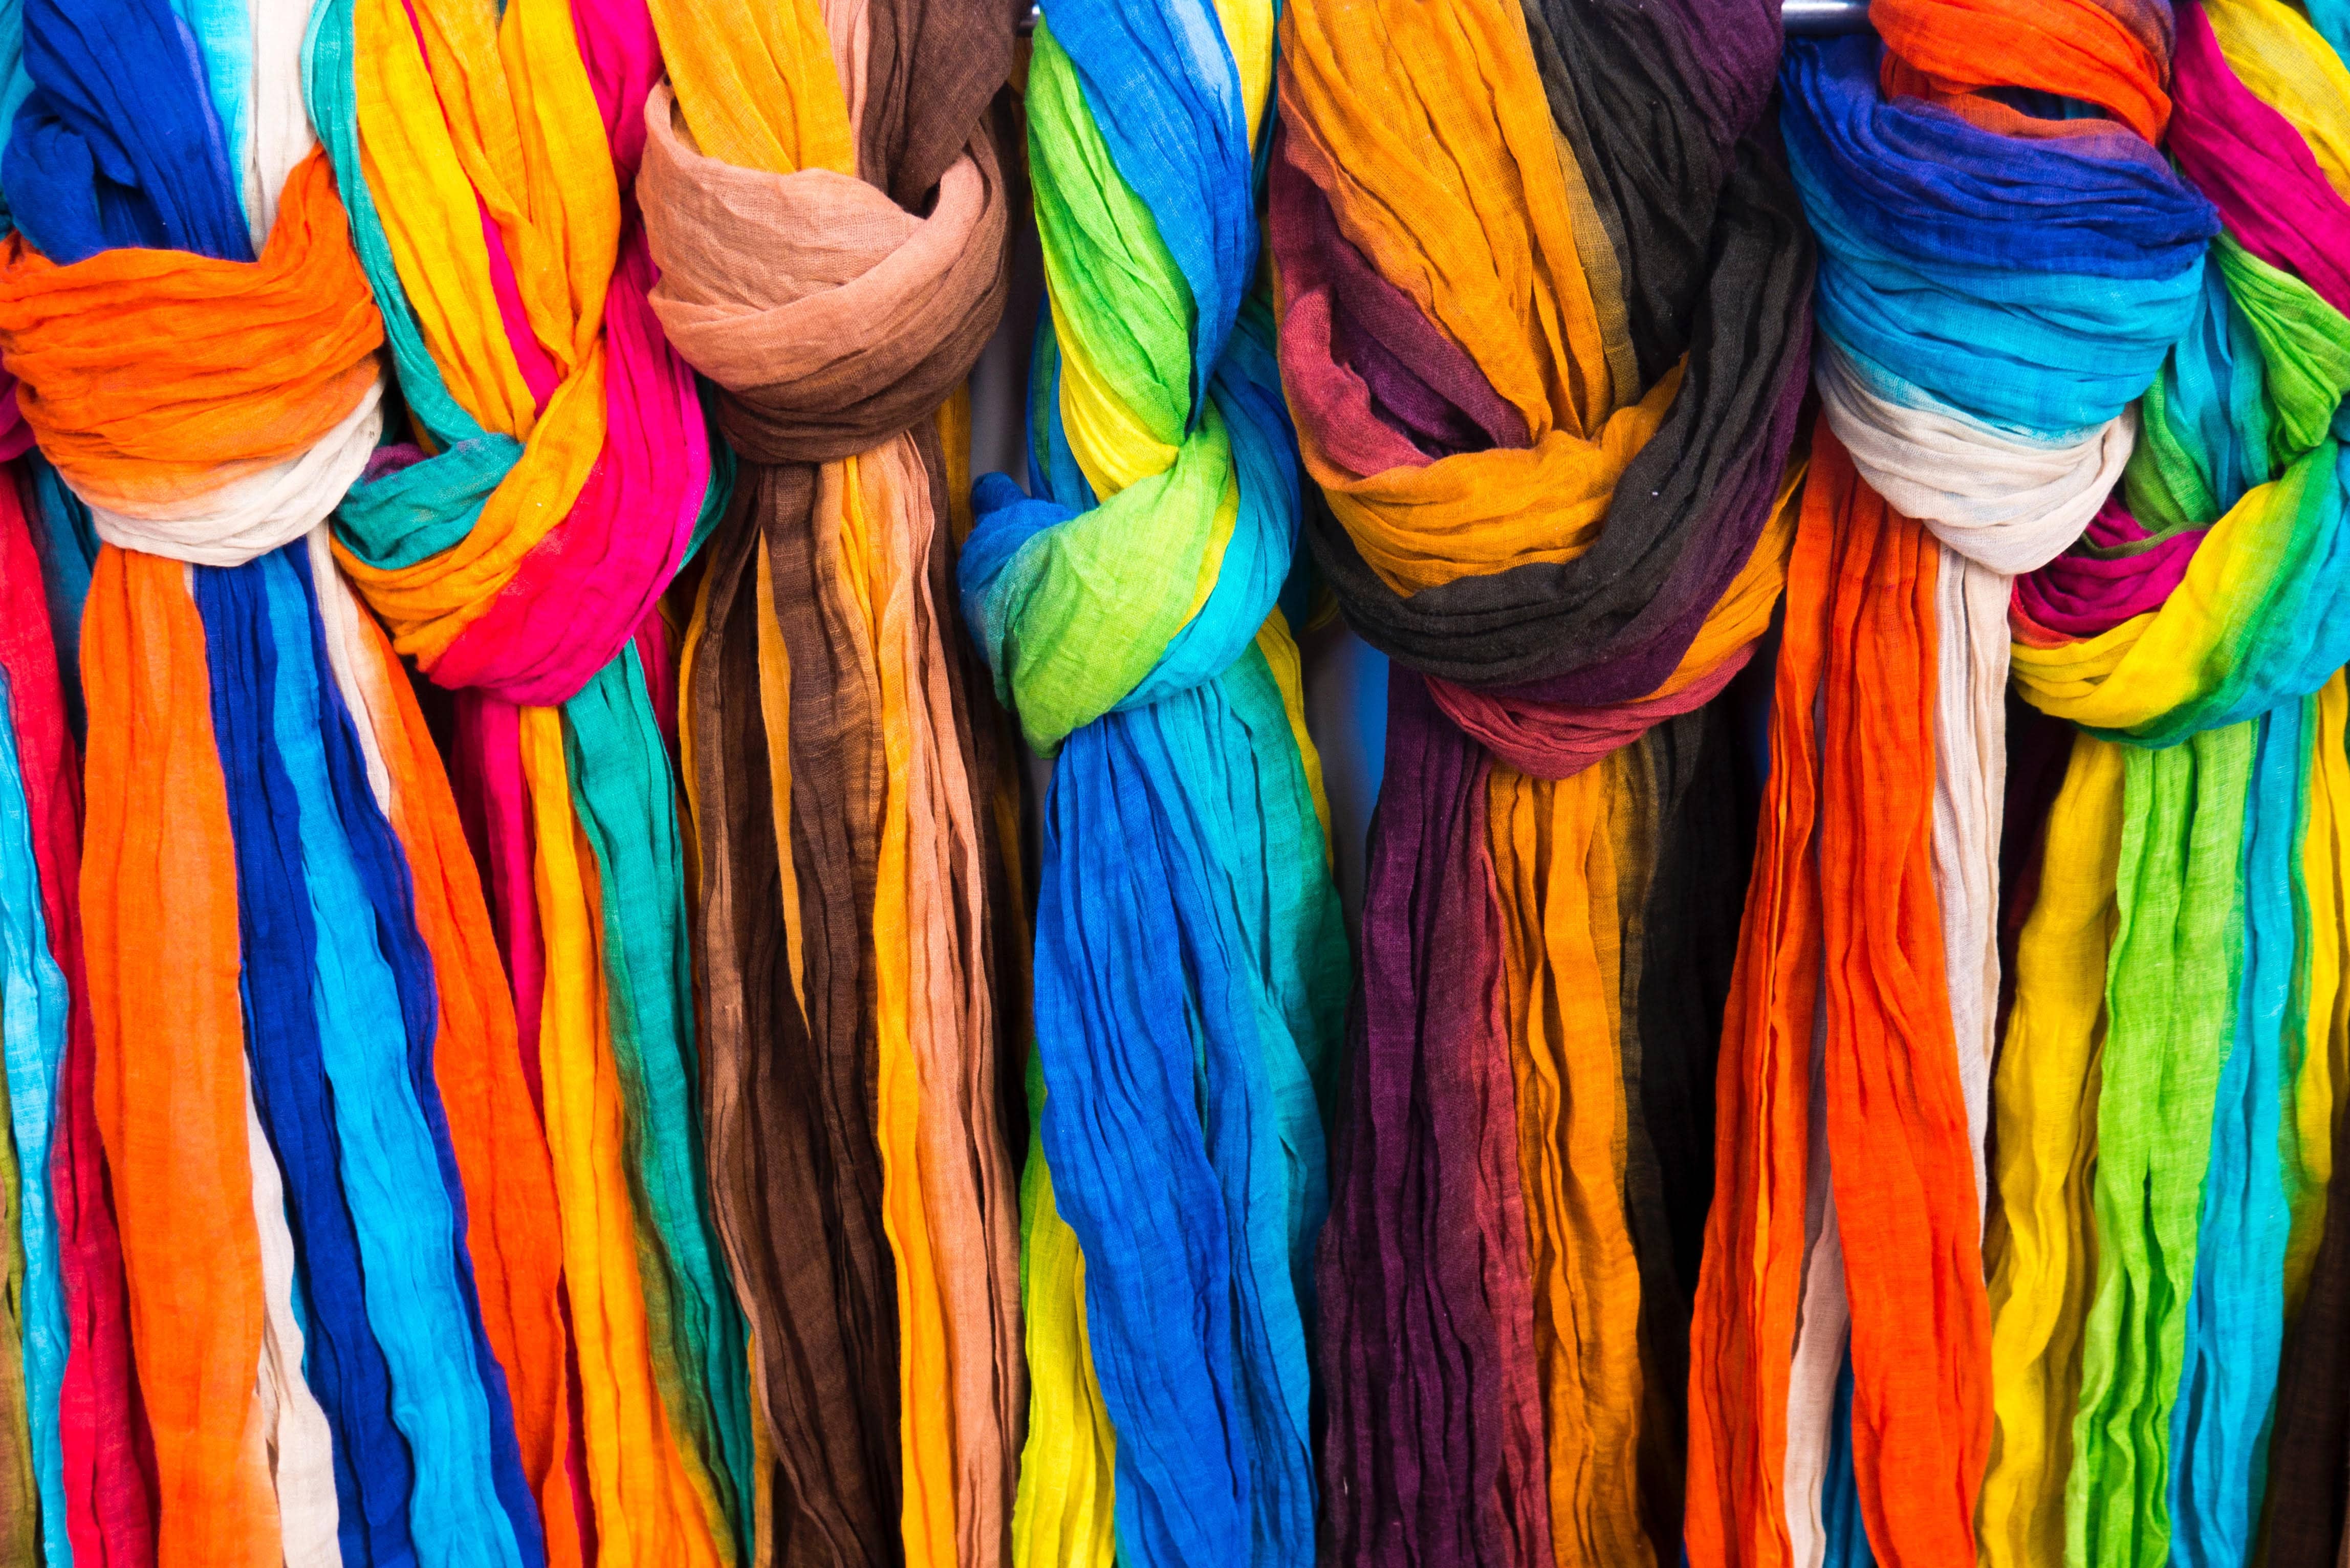 acid dyes exporters in Patna, Vadodara, Ghaziabad, Ludhiana, Agra, Nashik, Faridabad, Rajkot